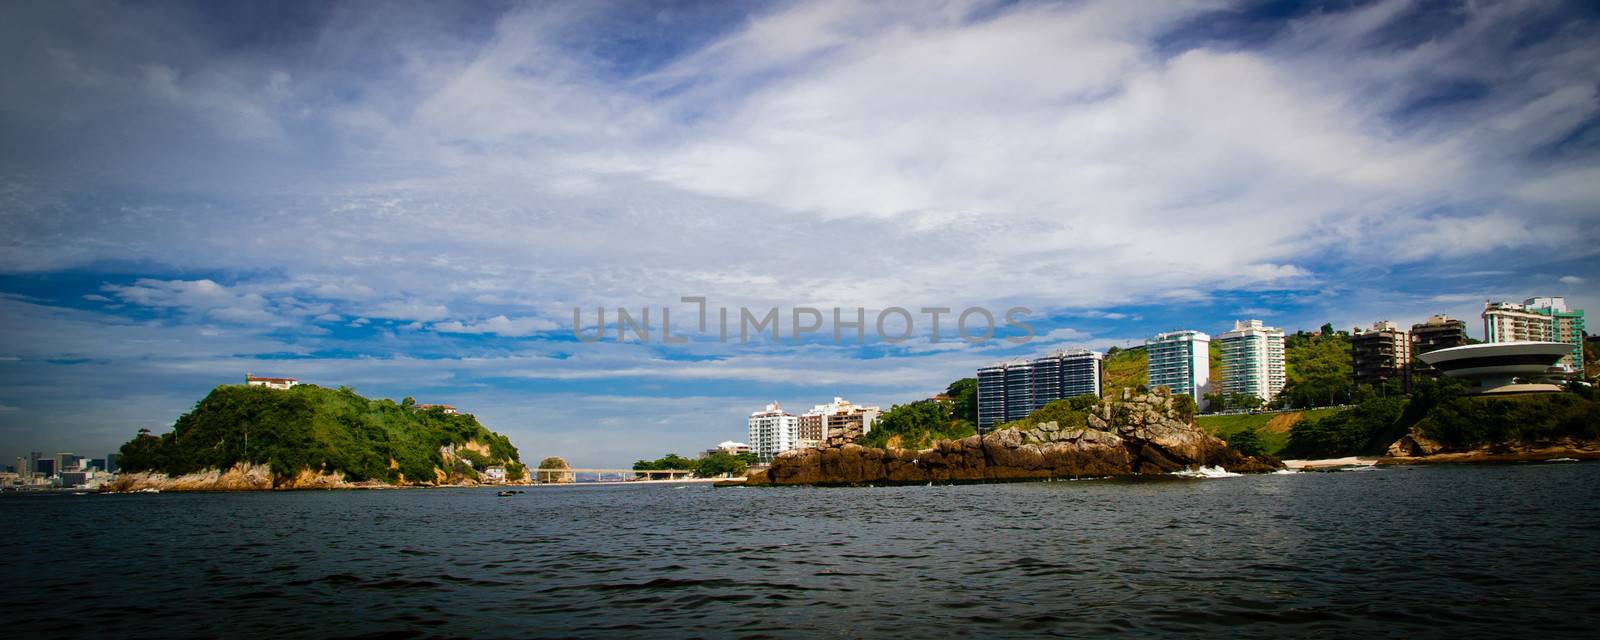 Panoramic view of Boa Viagem island in the city of Niteroi, Rio de Janeiro, Brazil.